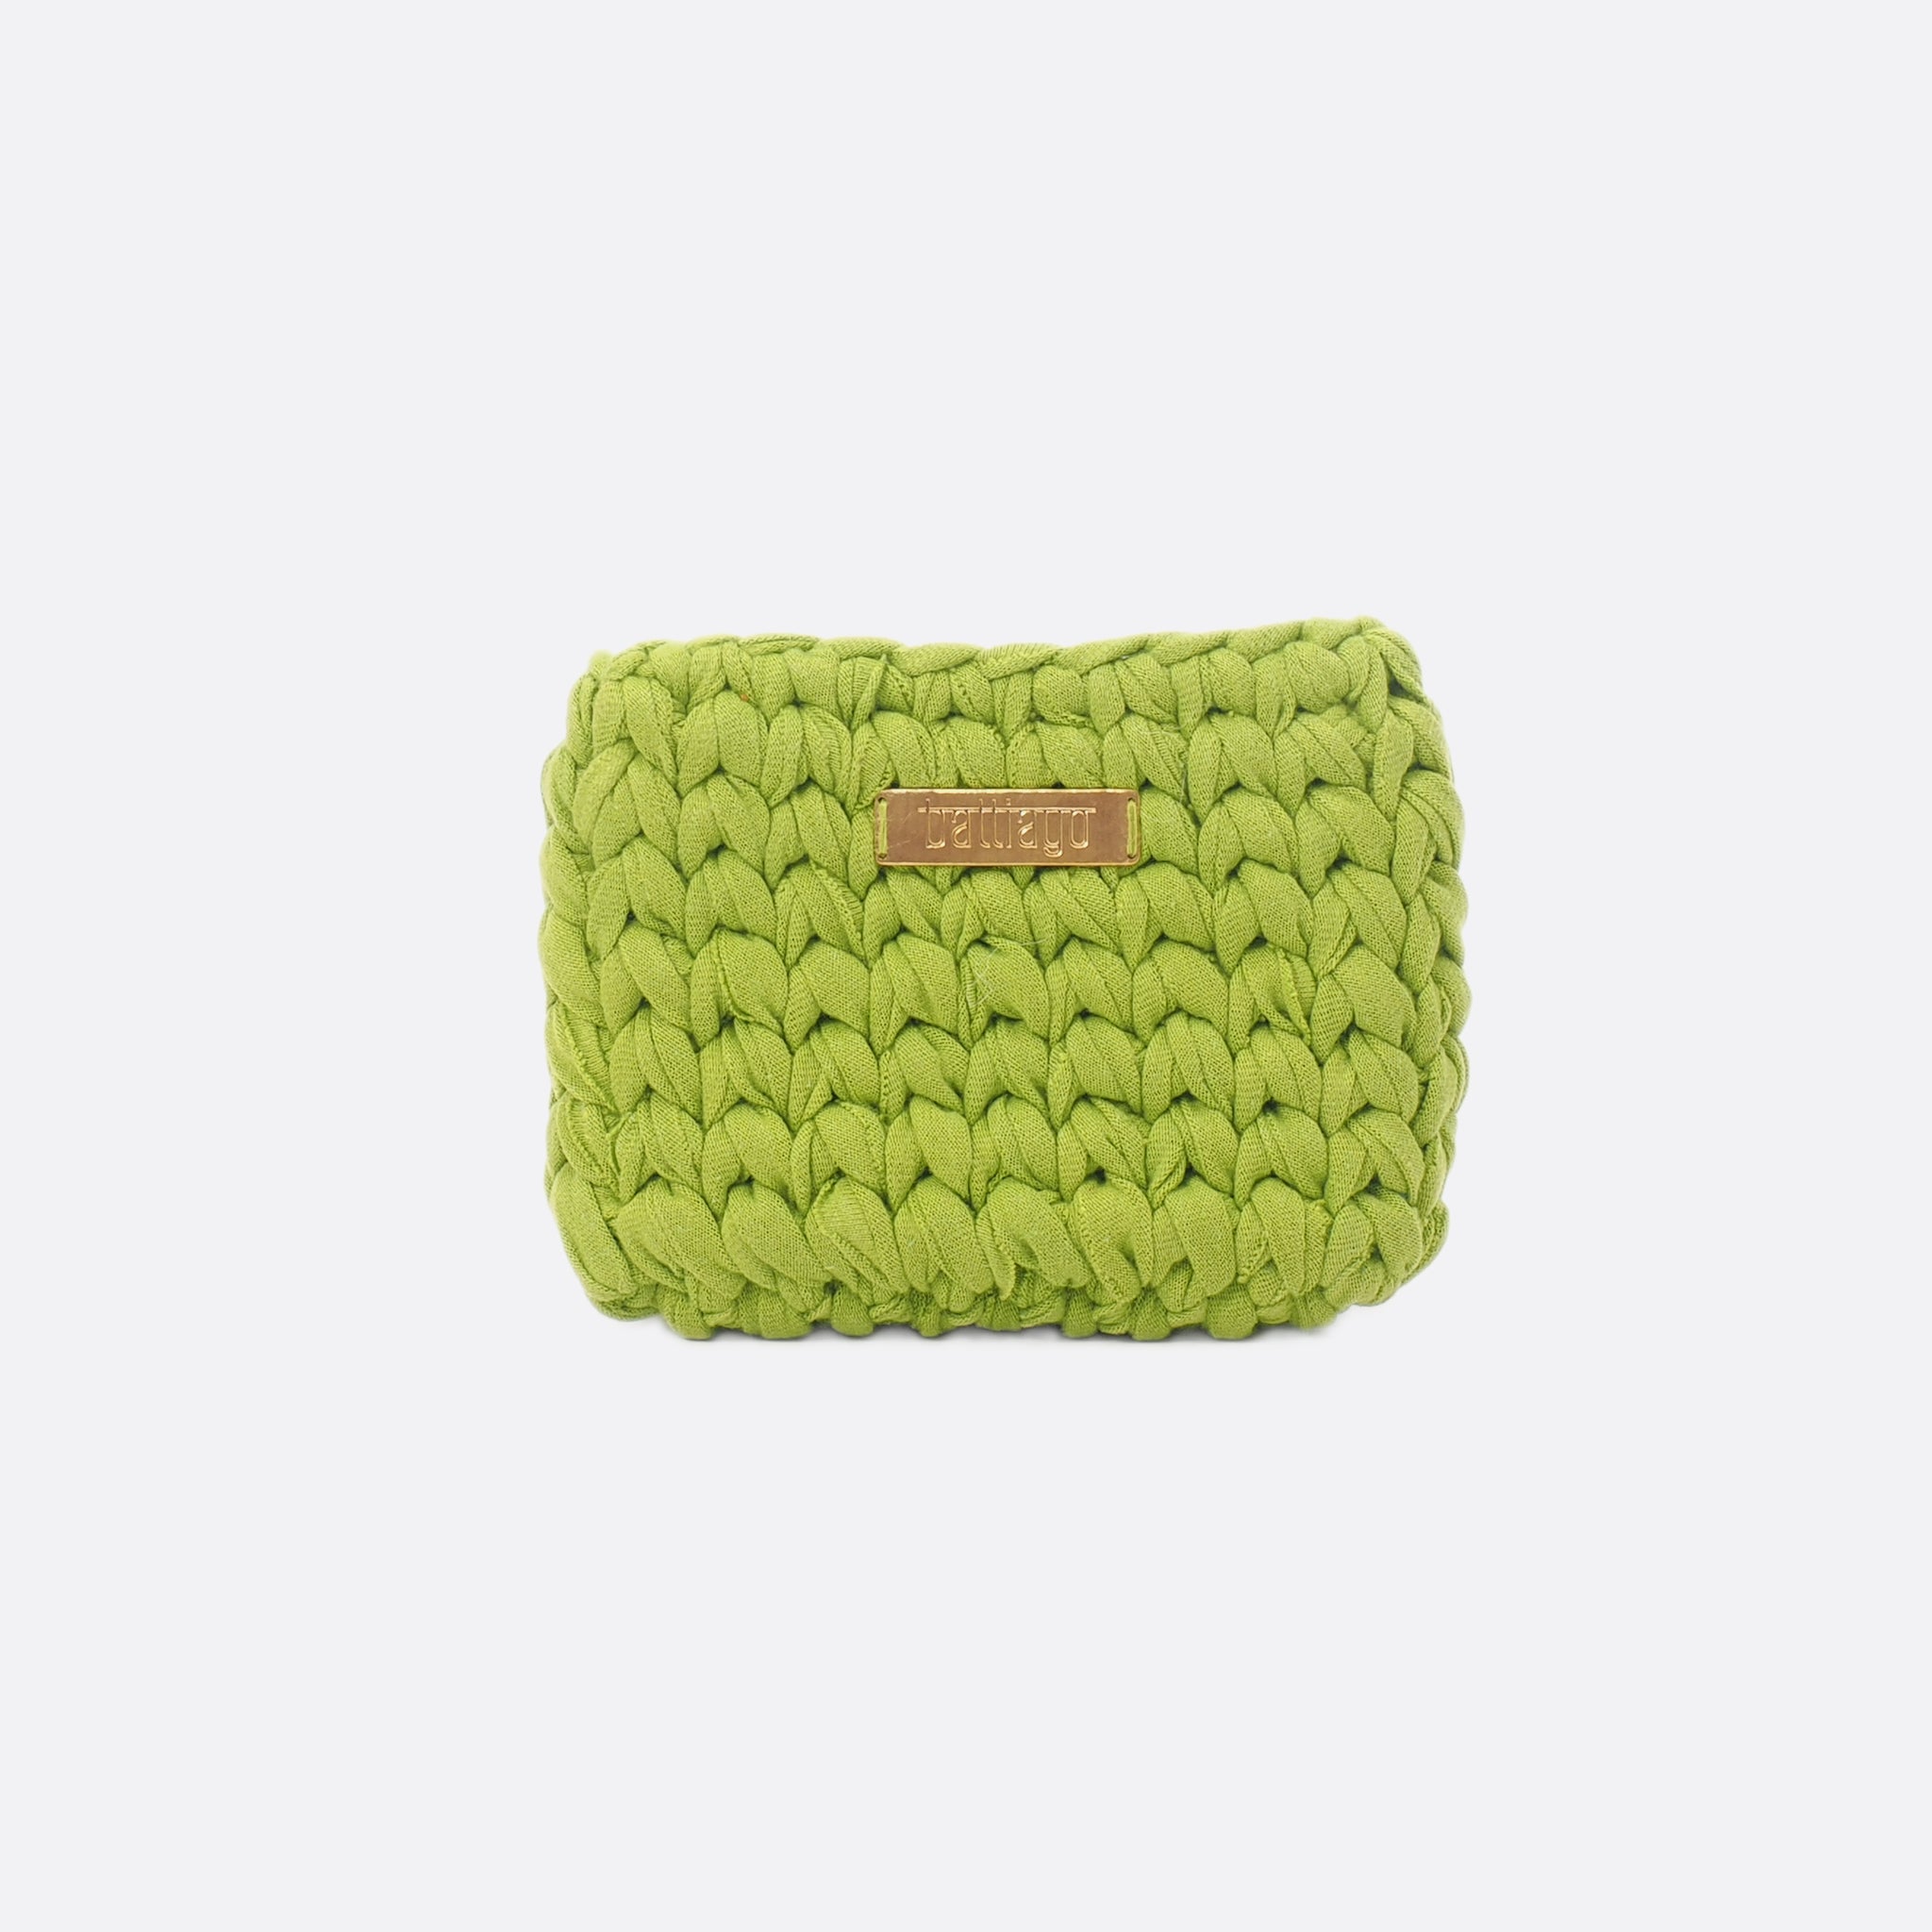 Green 'Clutch' Bag - Small